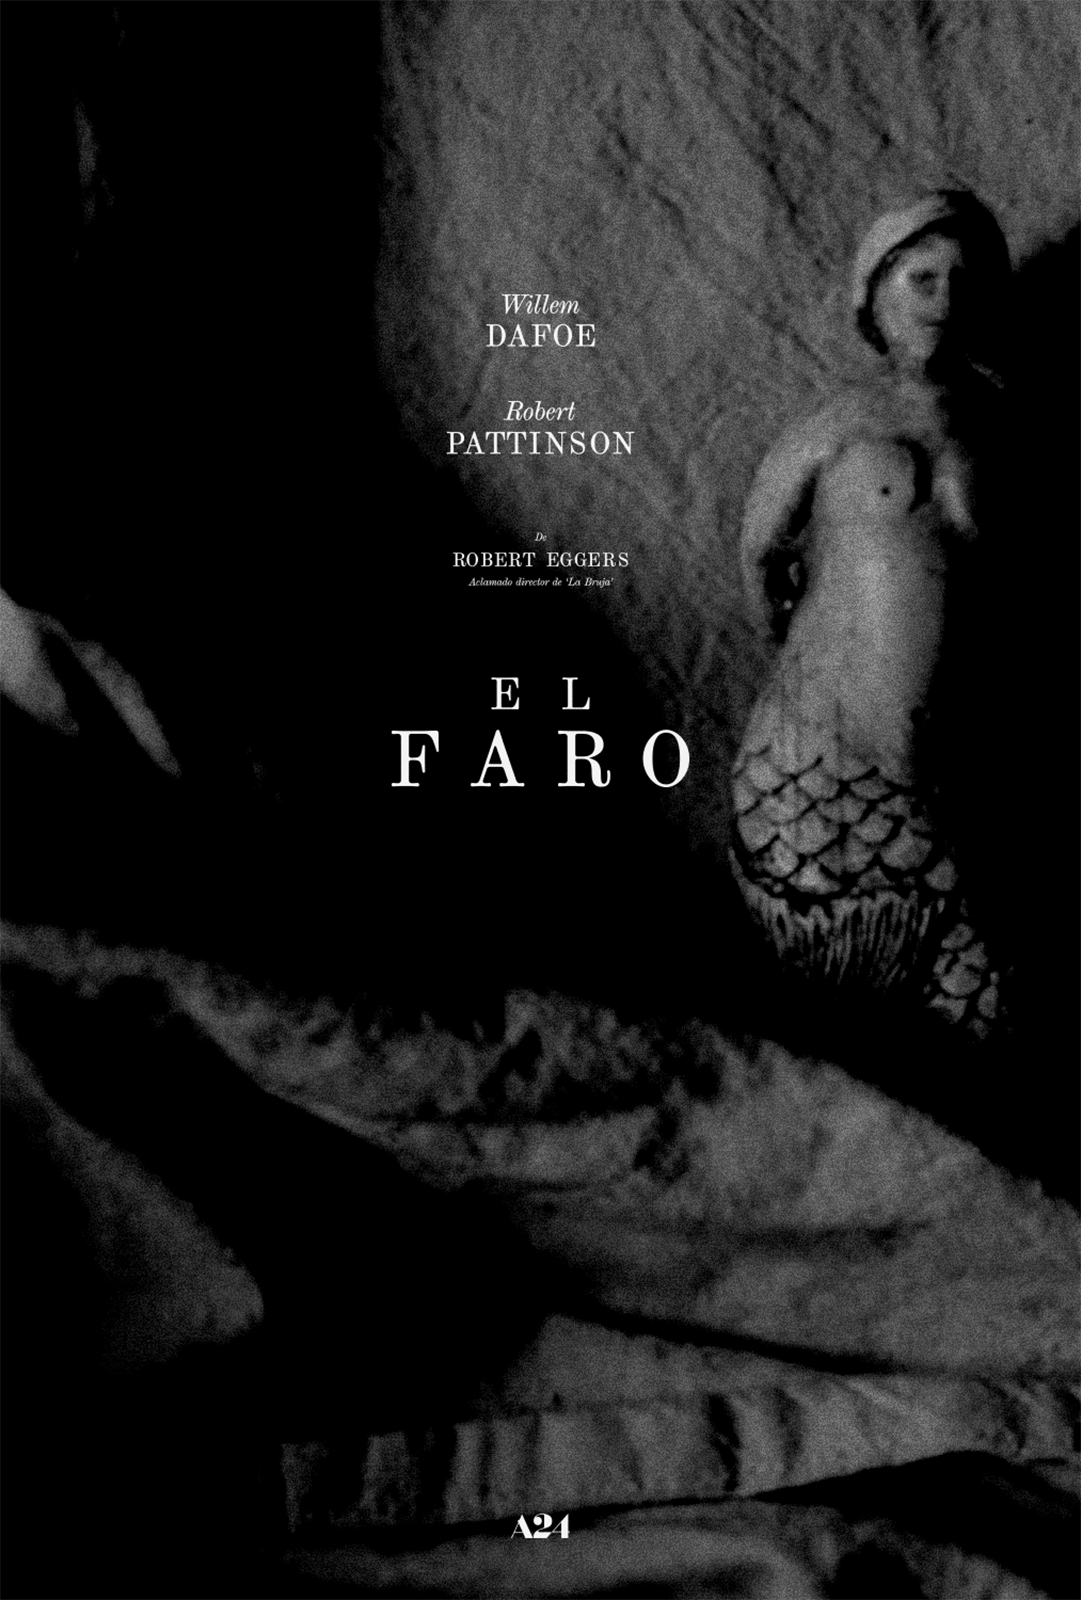 El faro (The Lighthouse, Robert Eggers, 2019)